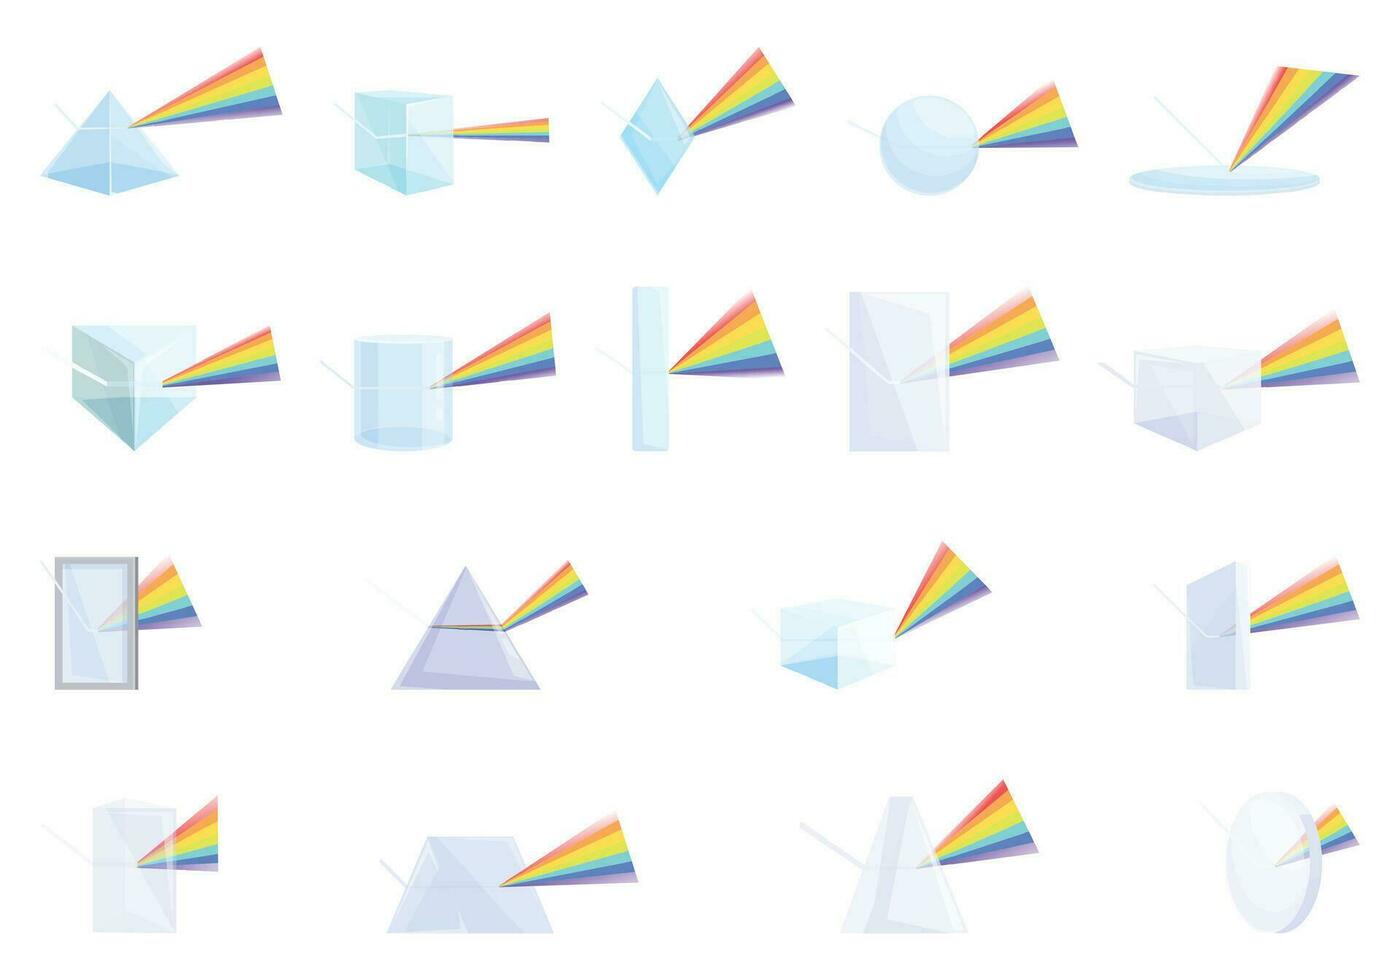 prisma ligero refracción efecto íconos conjunto dibujos animados vector. arco iris prisma lente vector